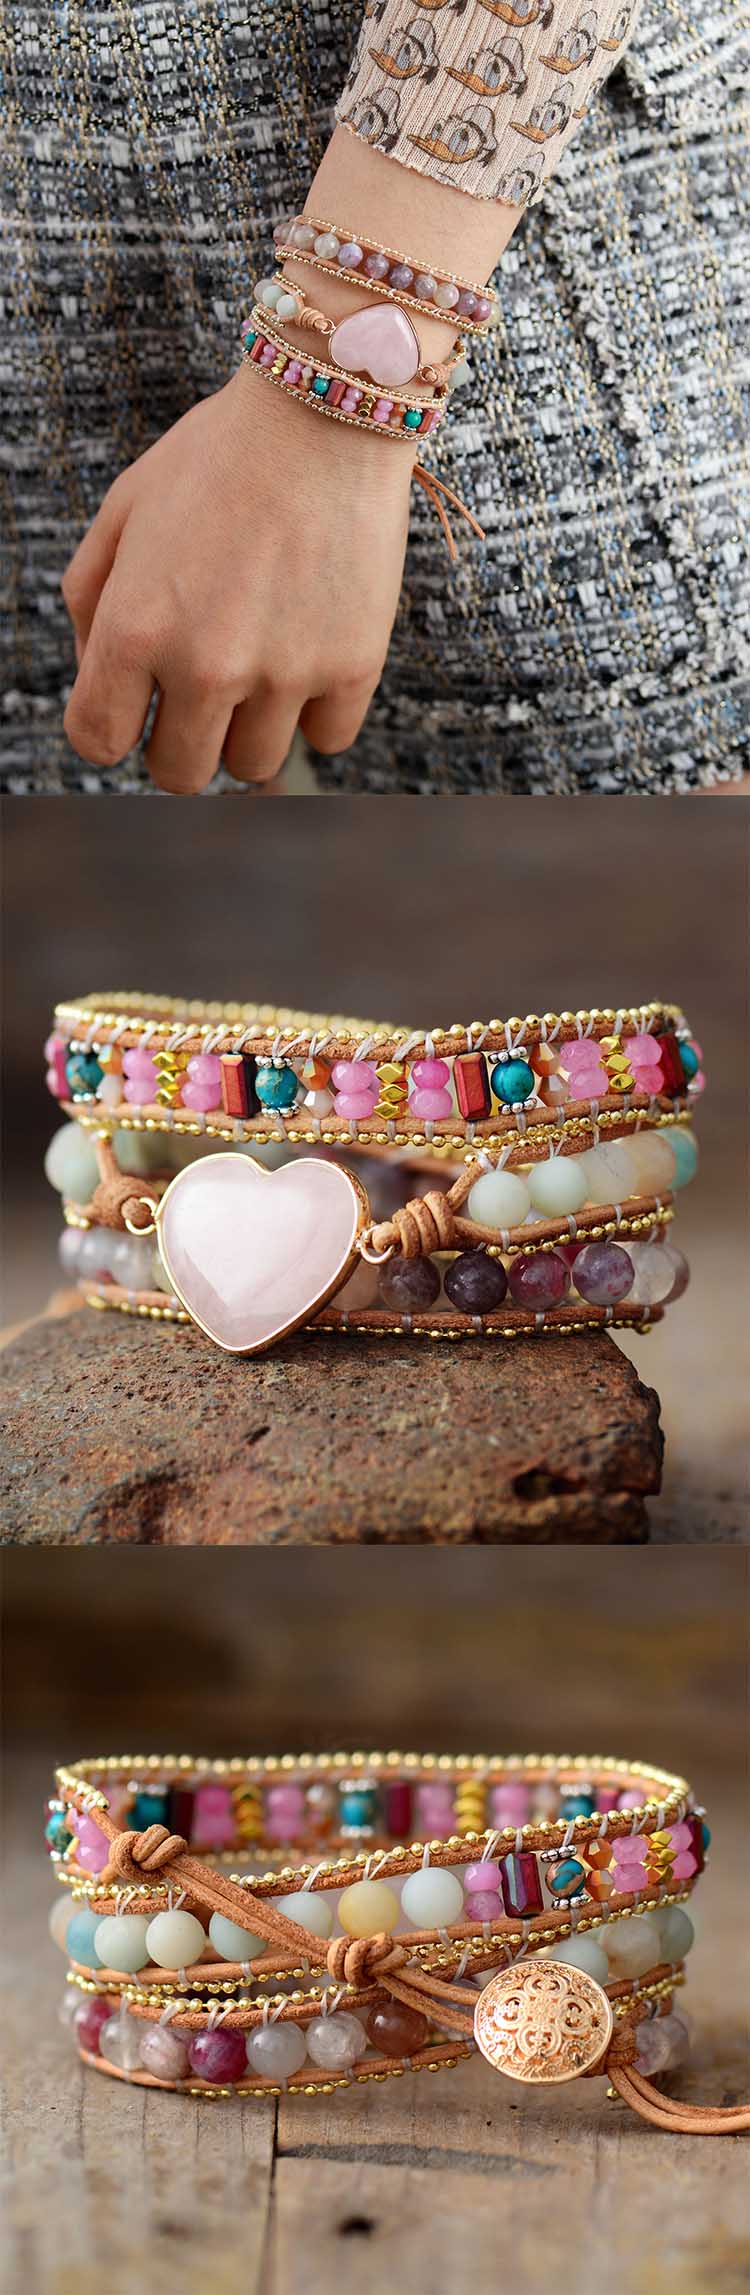 Heart & Healing Rose Quartz Wrap Bracelet